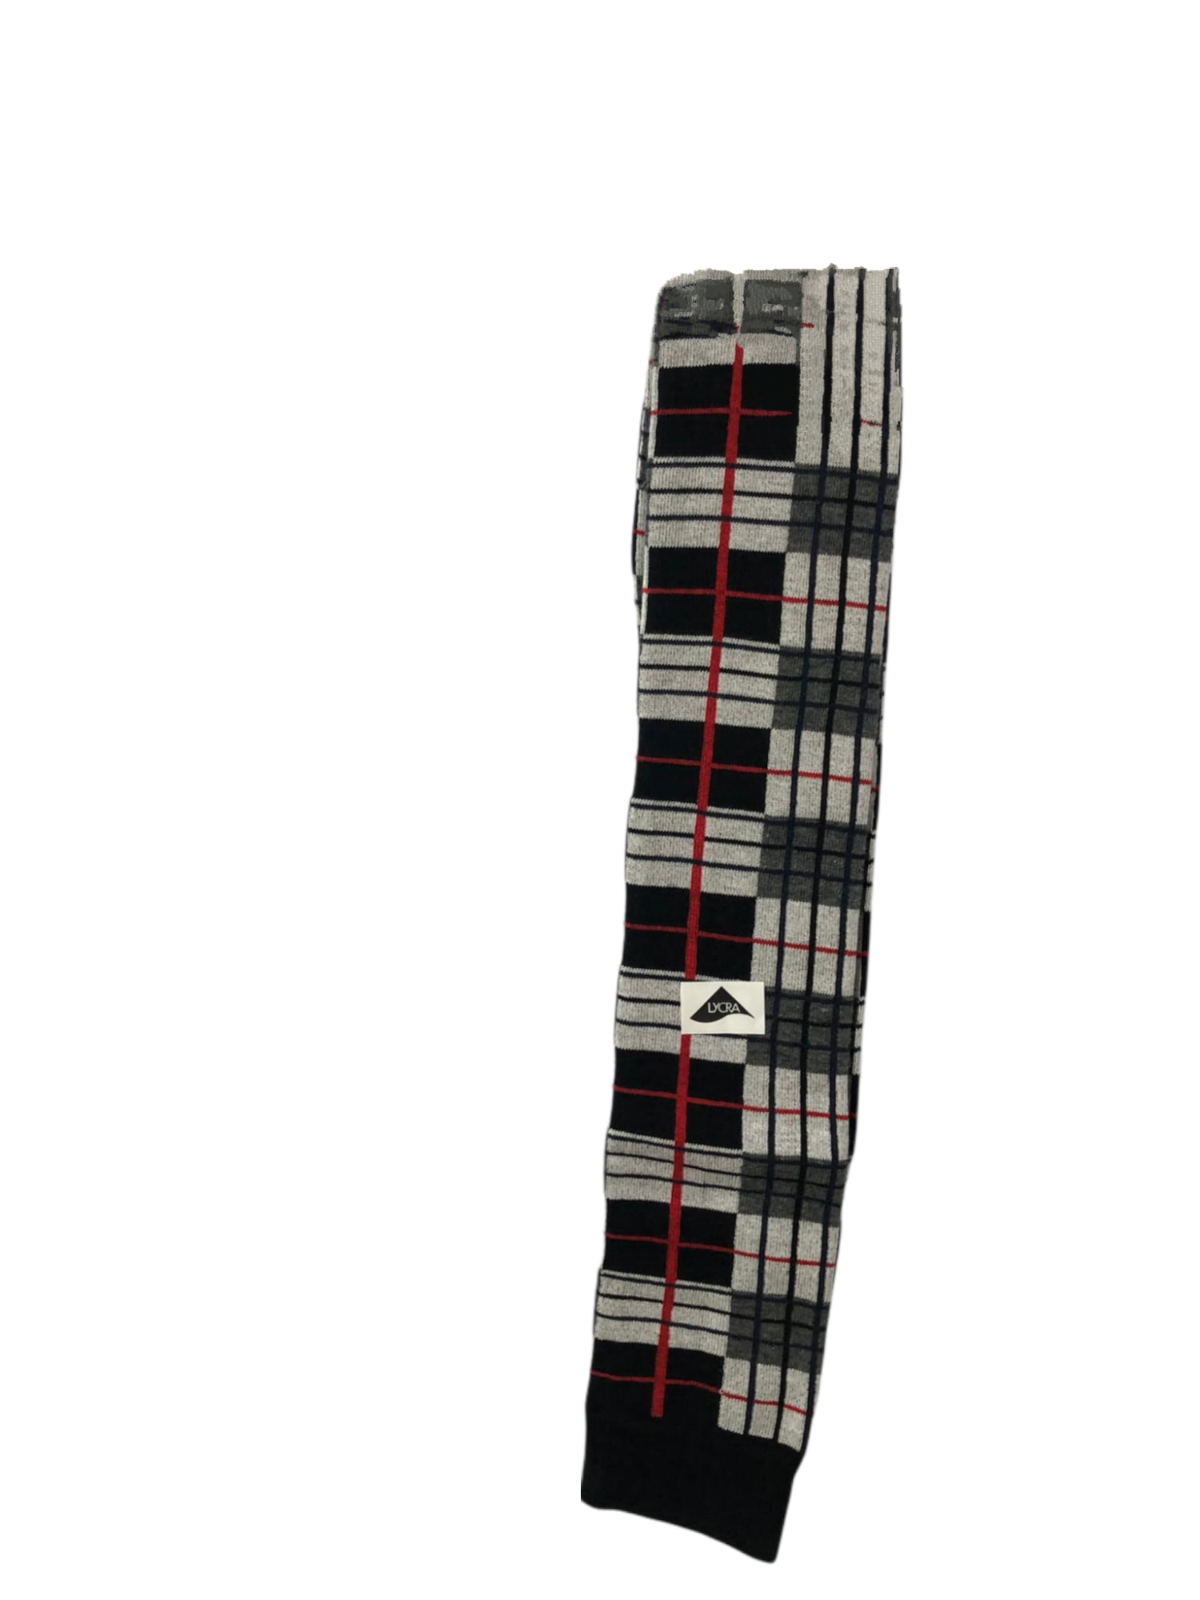 Patterned Over Knee Socks (Tartans / Stripes / Leopard / Camo)